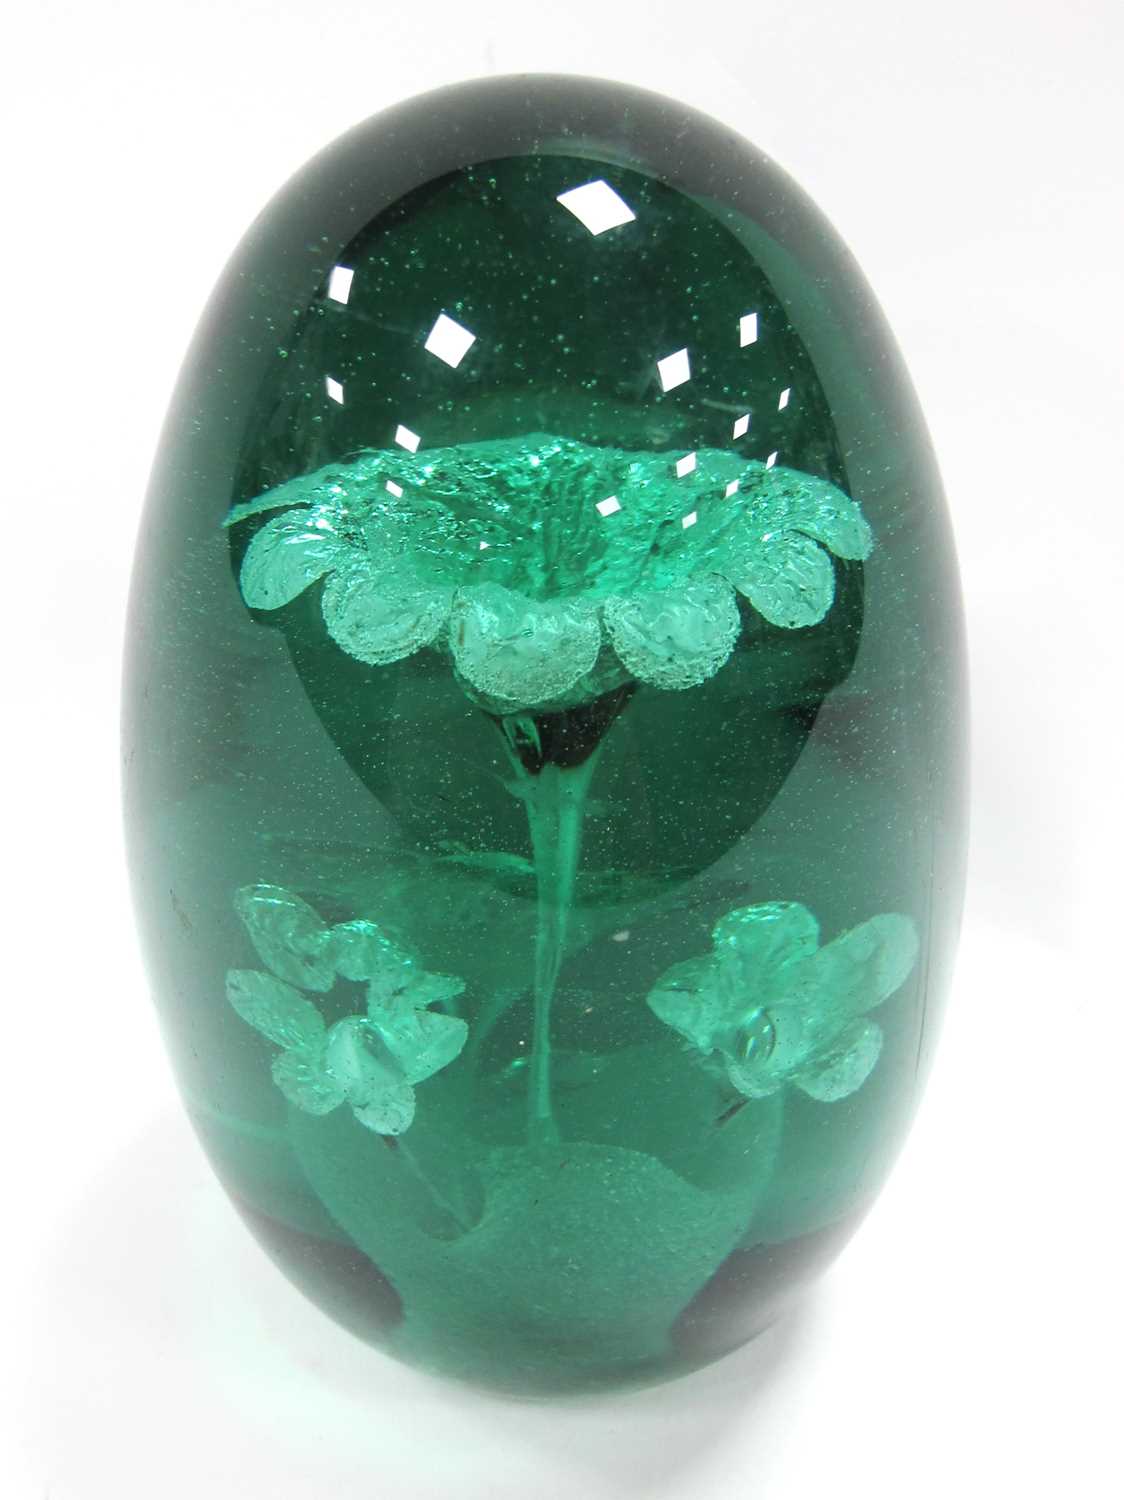 XIX Century Green Glass Dump, ovoid form with vase of flowers inner design 13.5cm high